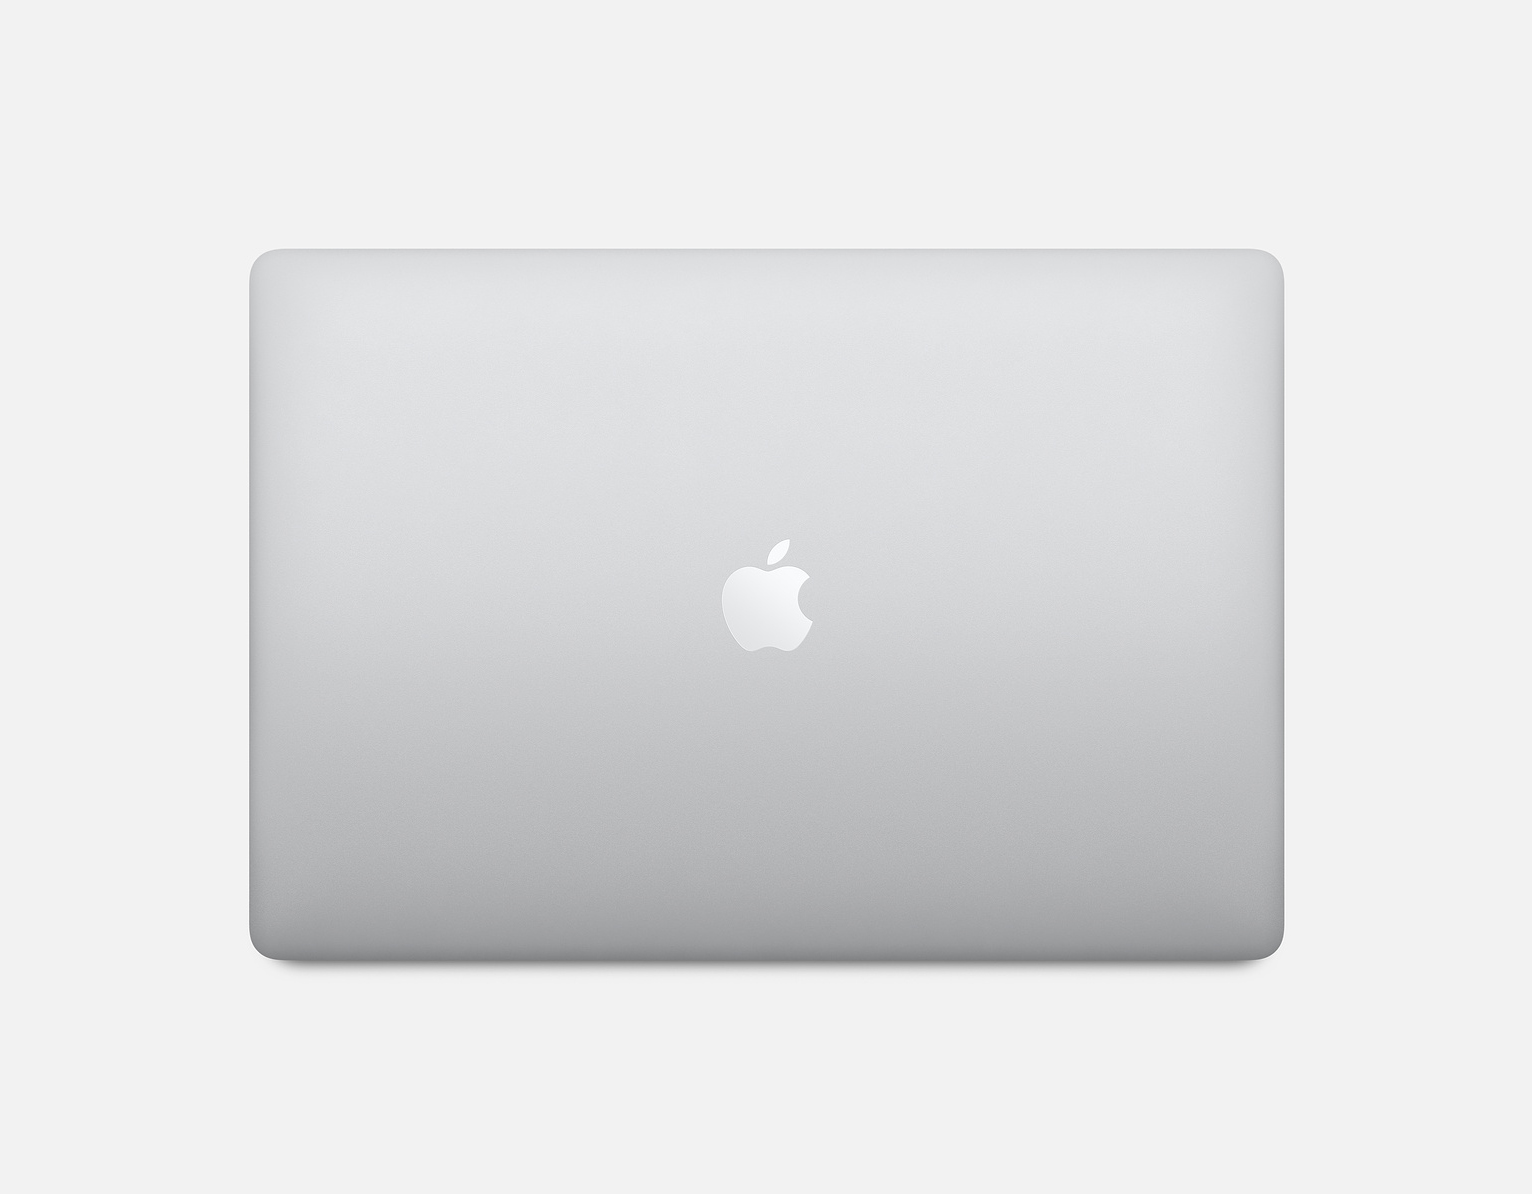 Apple macbook pro buy or wait sharecode